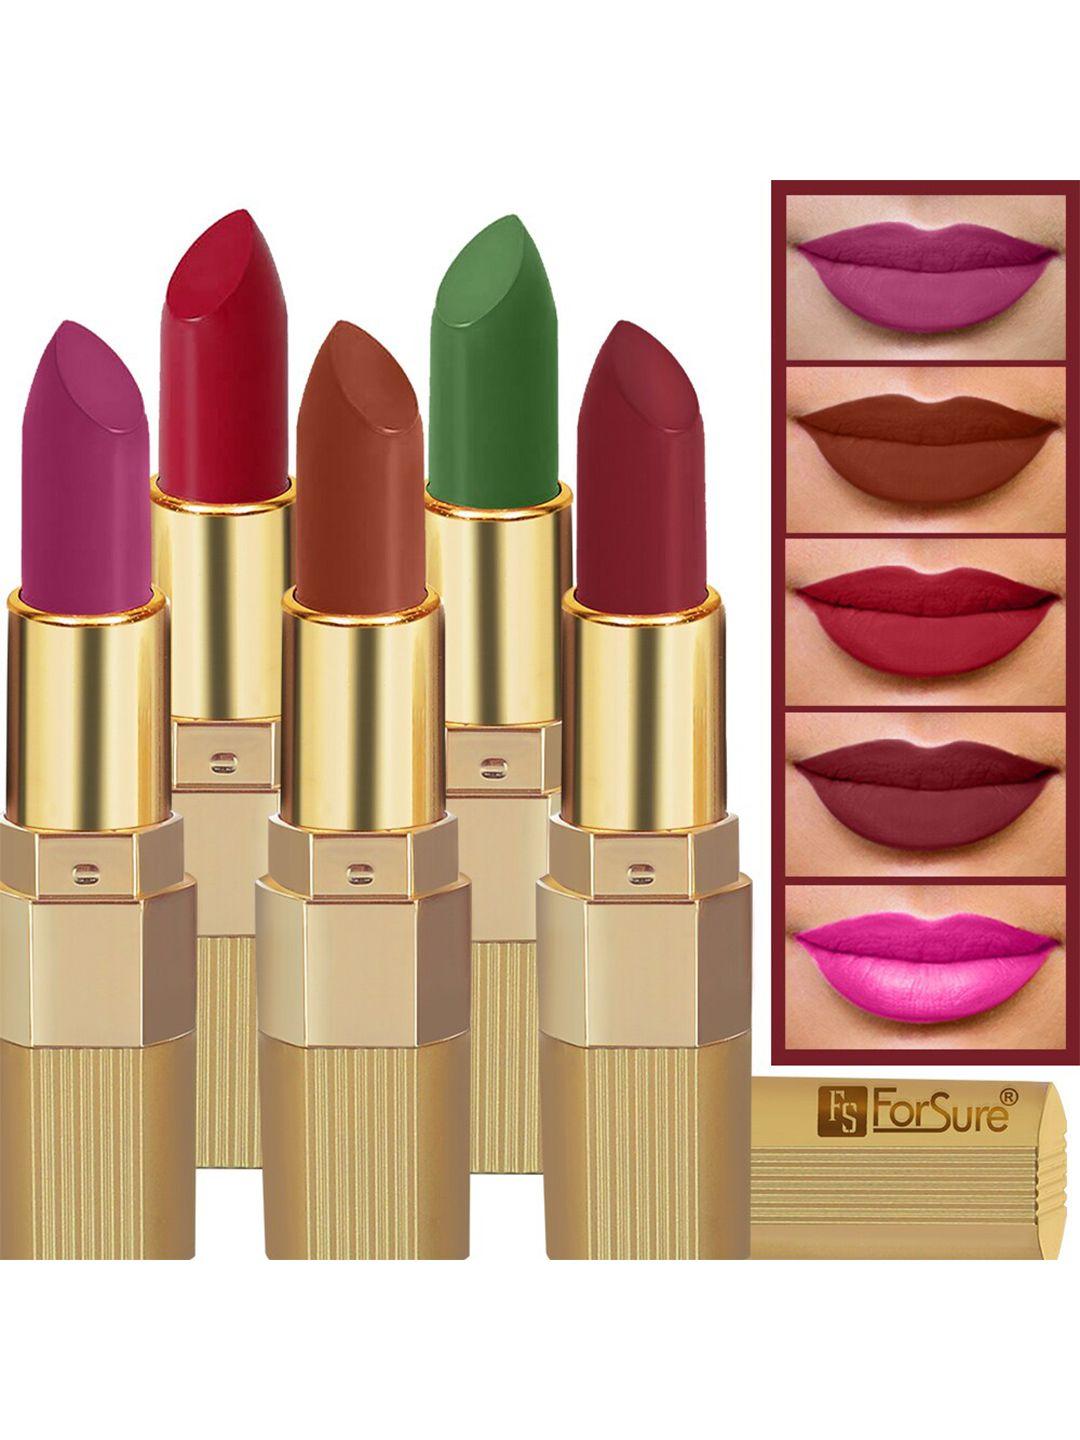 forsure xpression set of 5 long lasting matte lipsticks 3.5 gm each